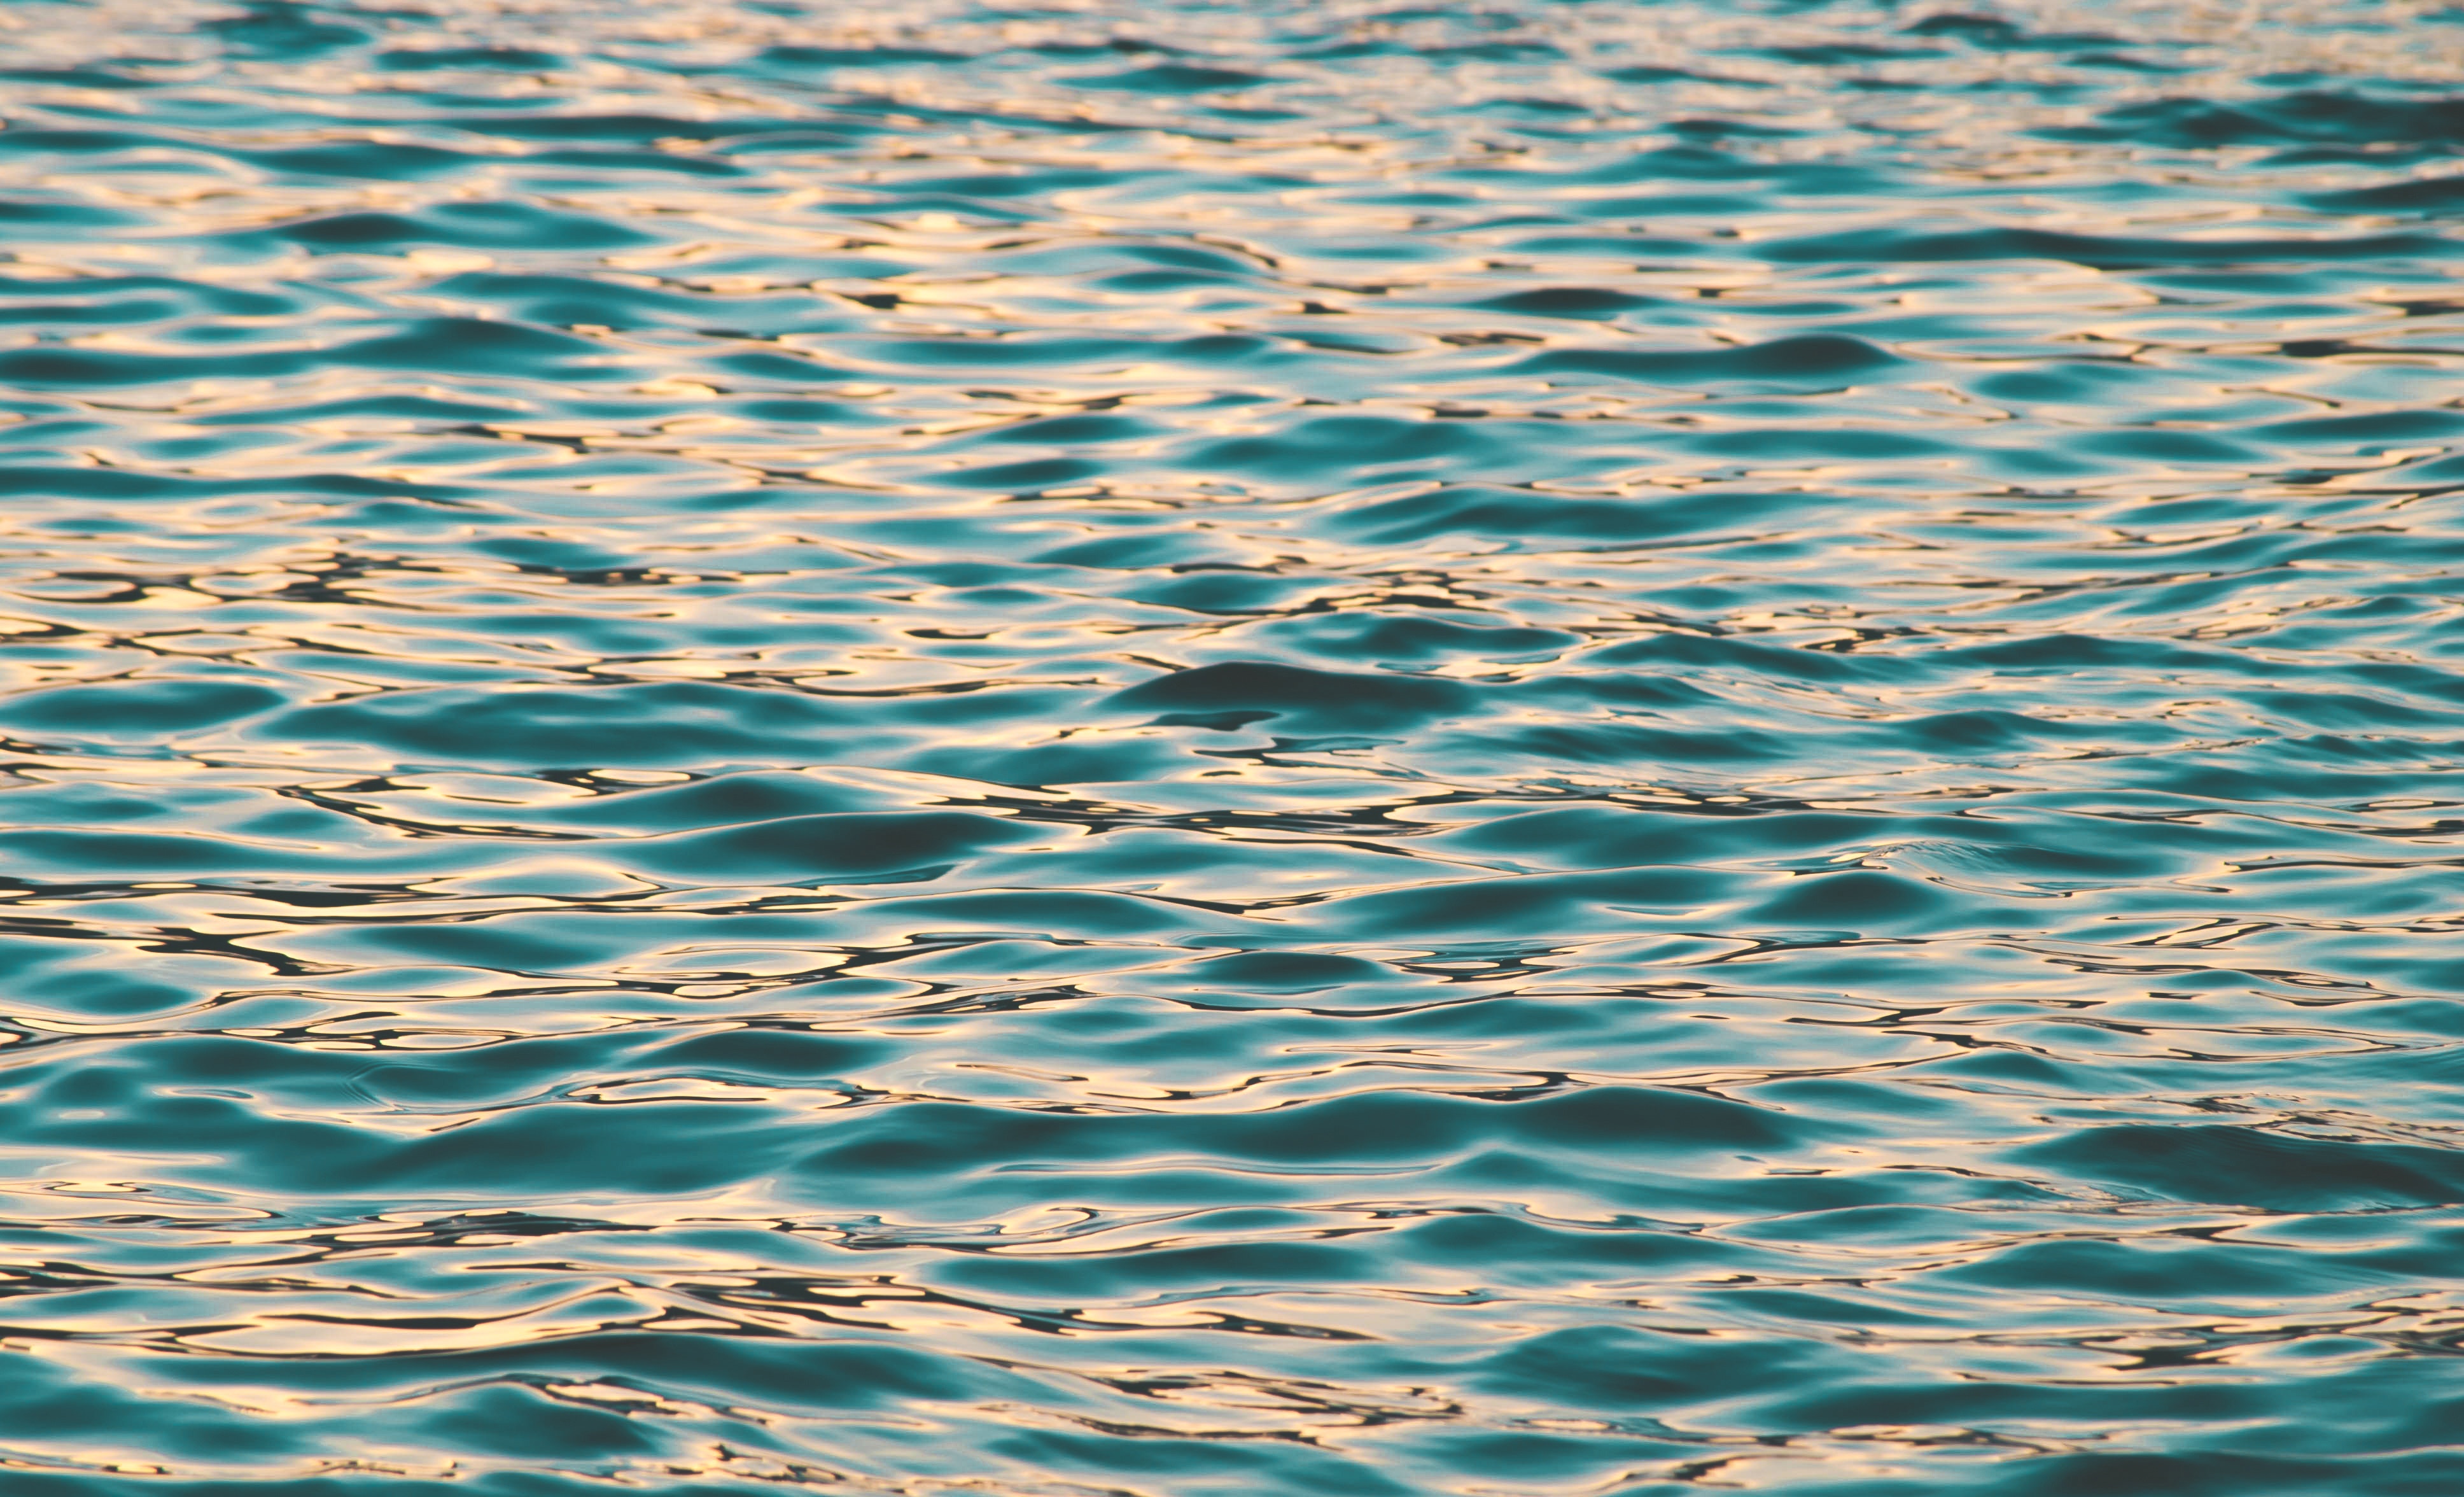 3872x2352 #wafe, #sunset, #summer, #minimal, #hd, #sea, #ripple, #blue, #reflection, #aesthetic, #orange, #Public domain image, #water Gallery HD Wallpaper